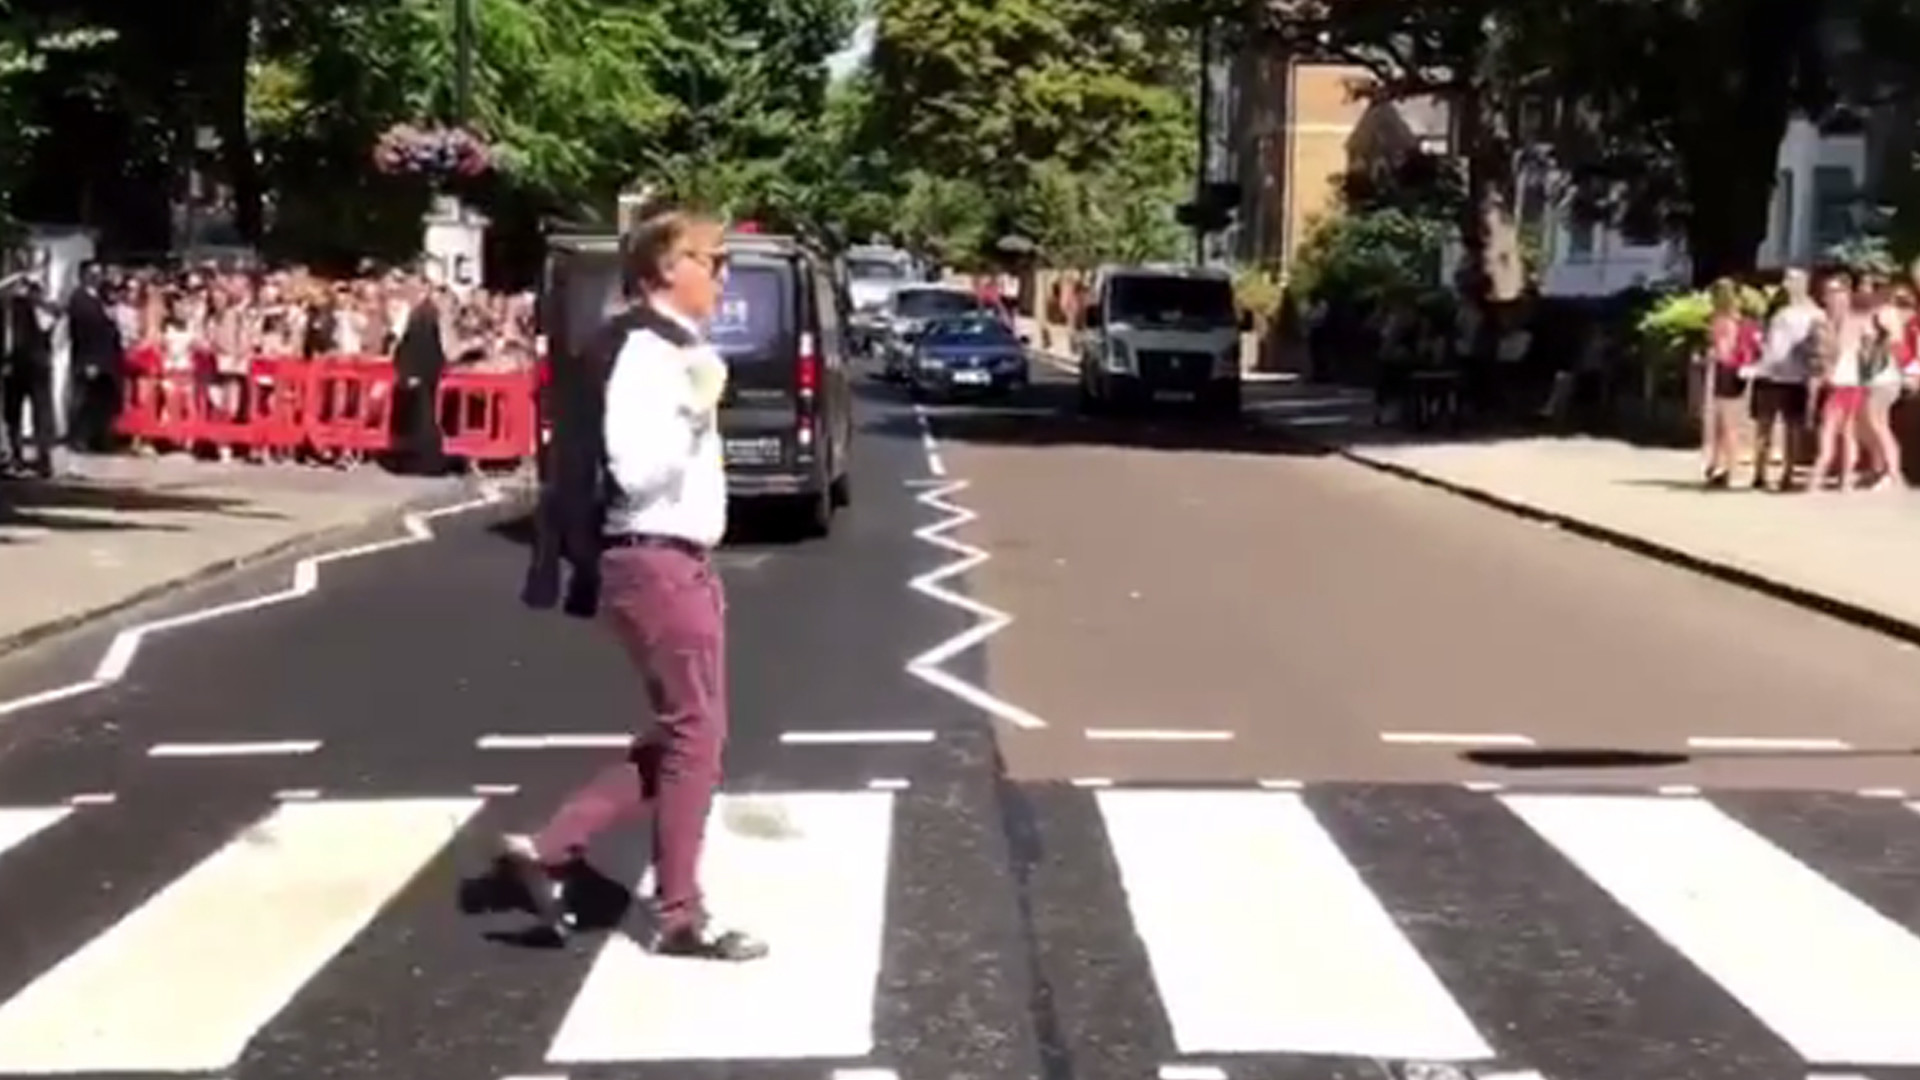 1920x1080 Paul McCartney re-creates The Beatles' famous 'Abbey Road' street crossing